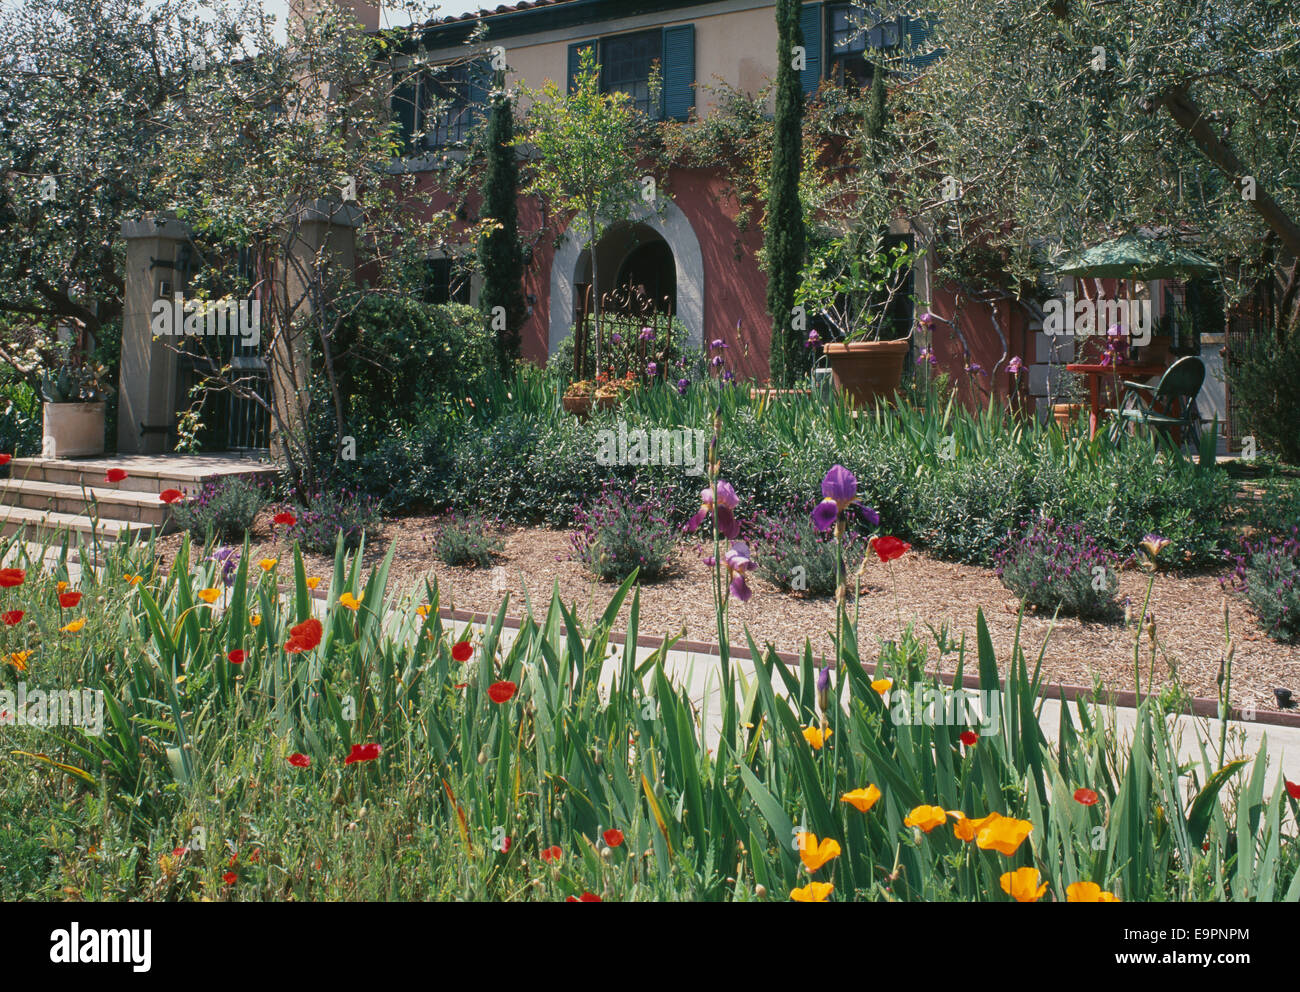 Les fleurs de printemps dans le jardin de la Villa Abbondanza, Los Angeles, USA. Banque D'Images